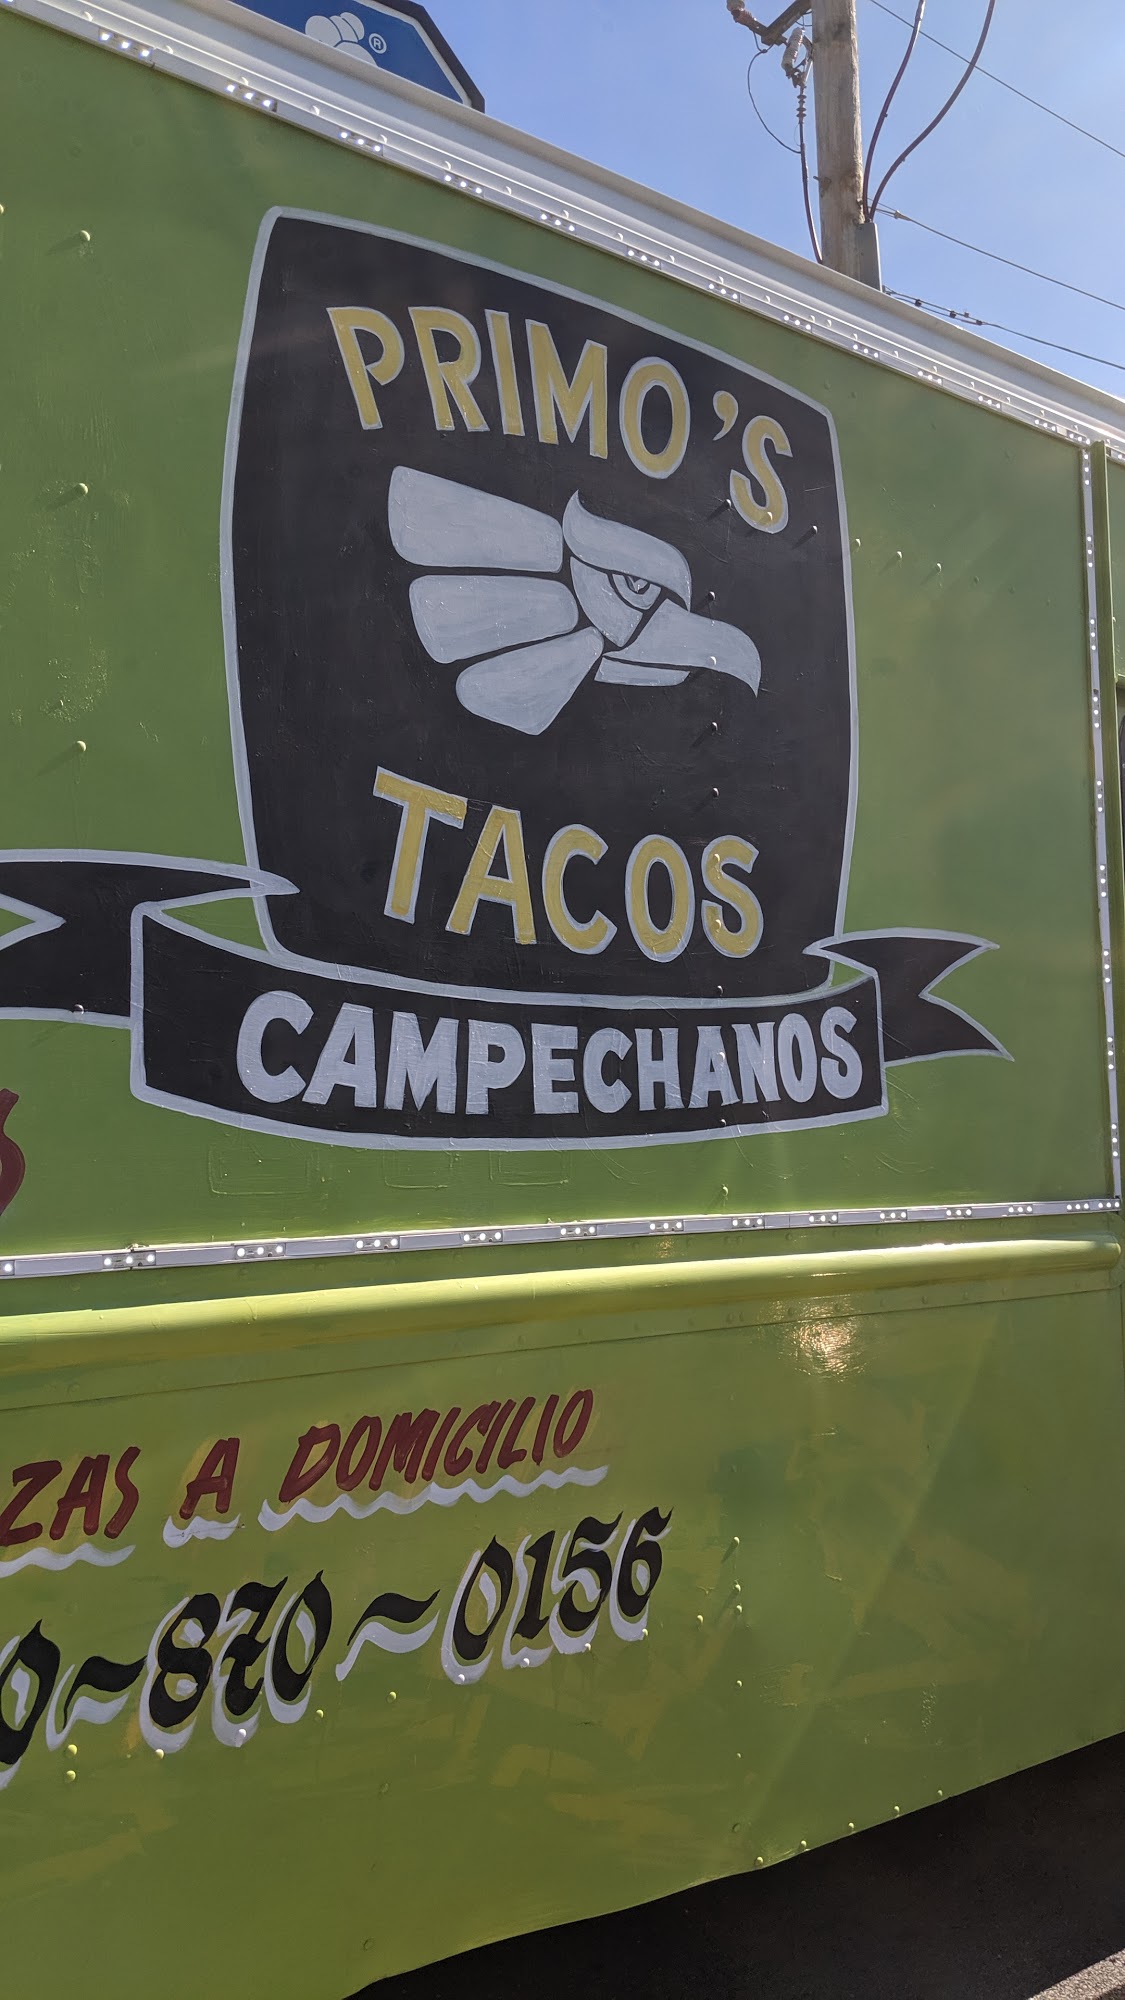 Primos taco truck